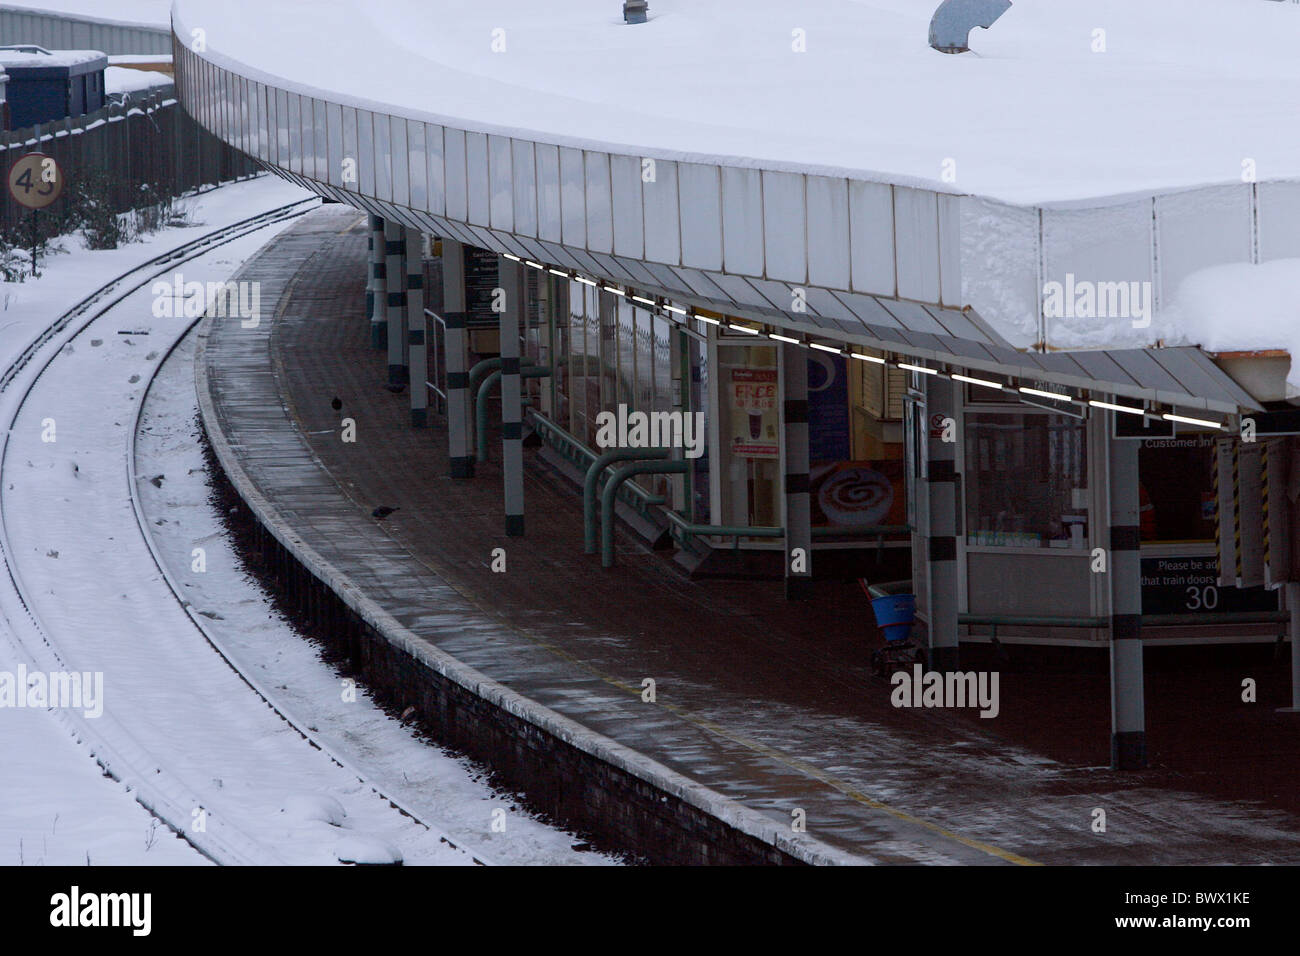 deserted platform at East croydon station due to snow Stock Photo